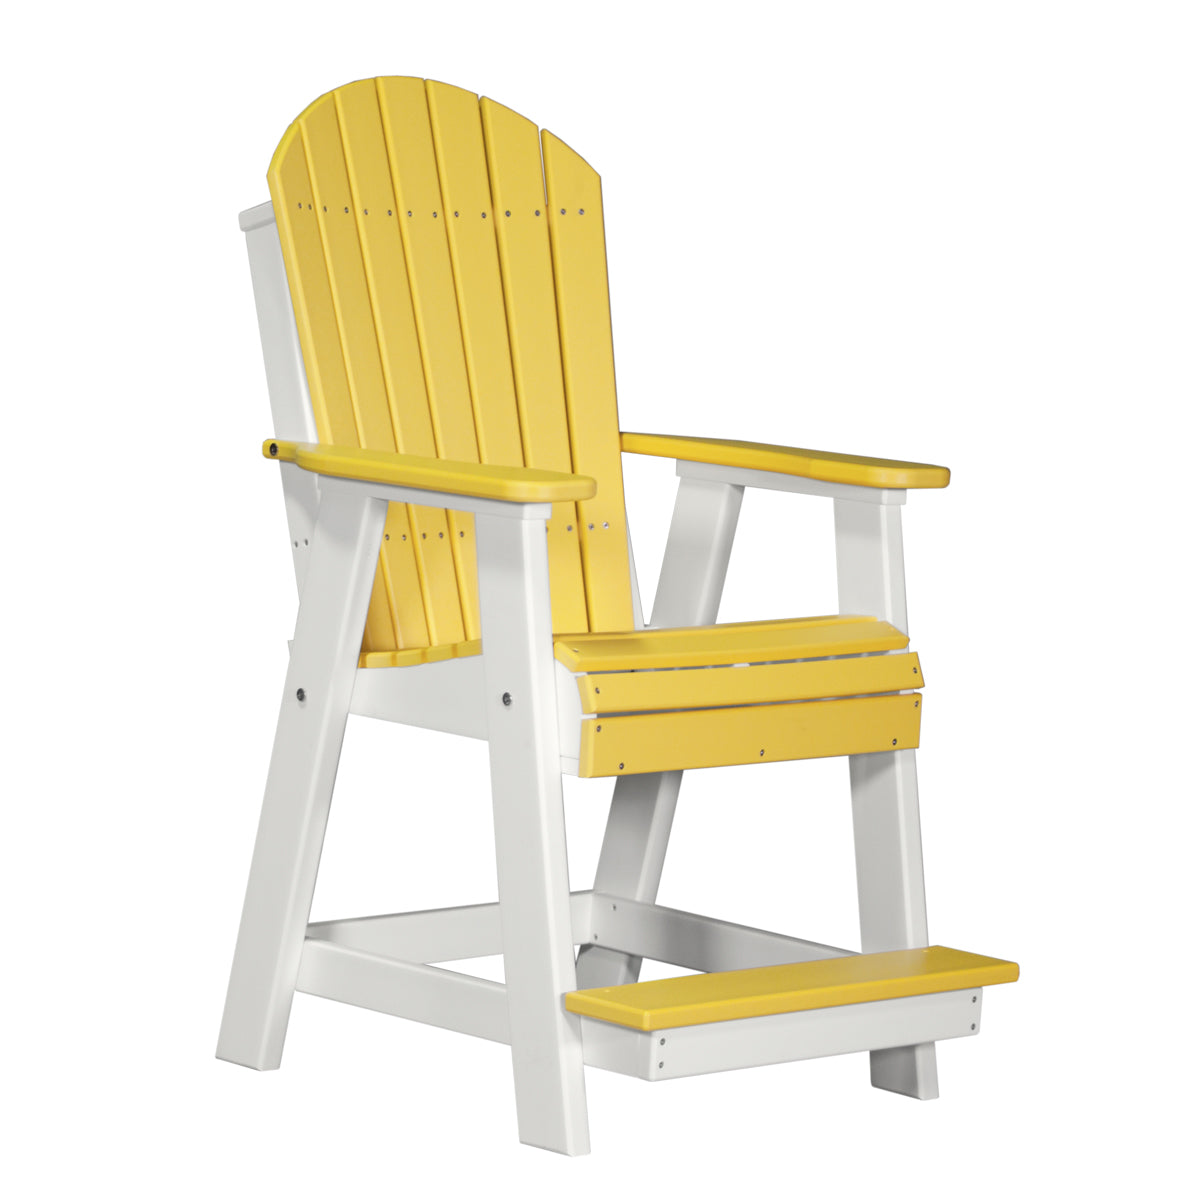 Luxcraft Adirondack Balcony Chair PABC